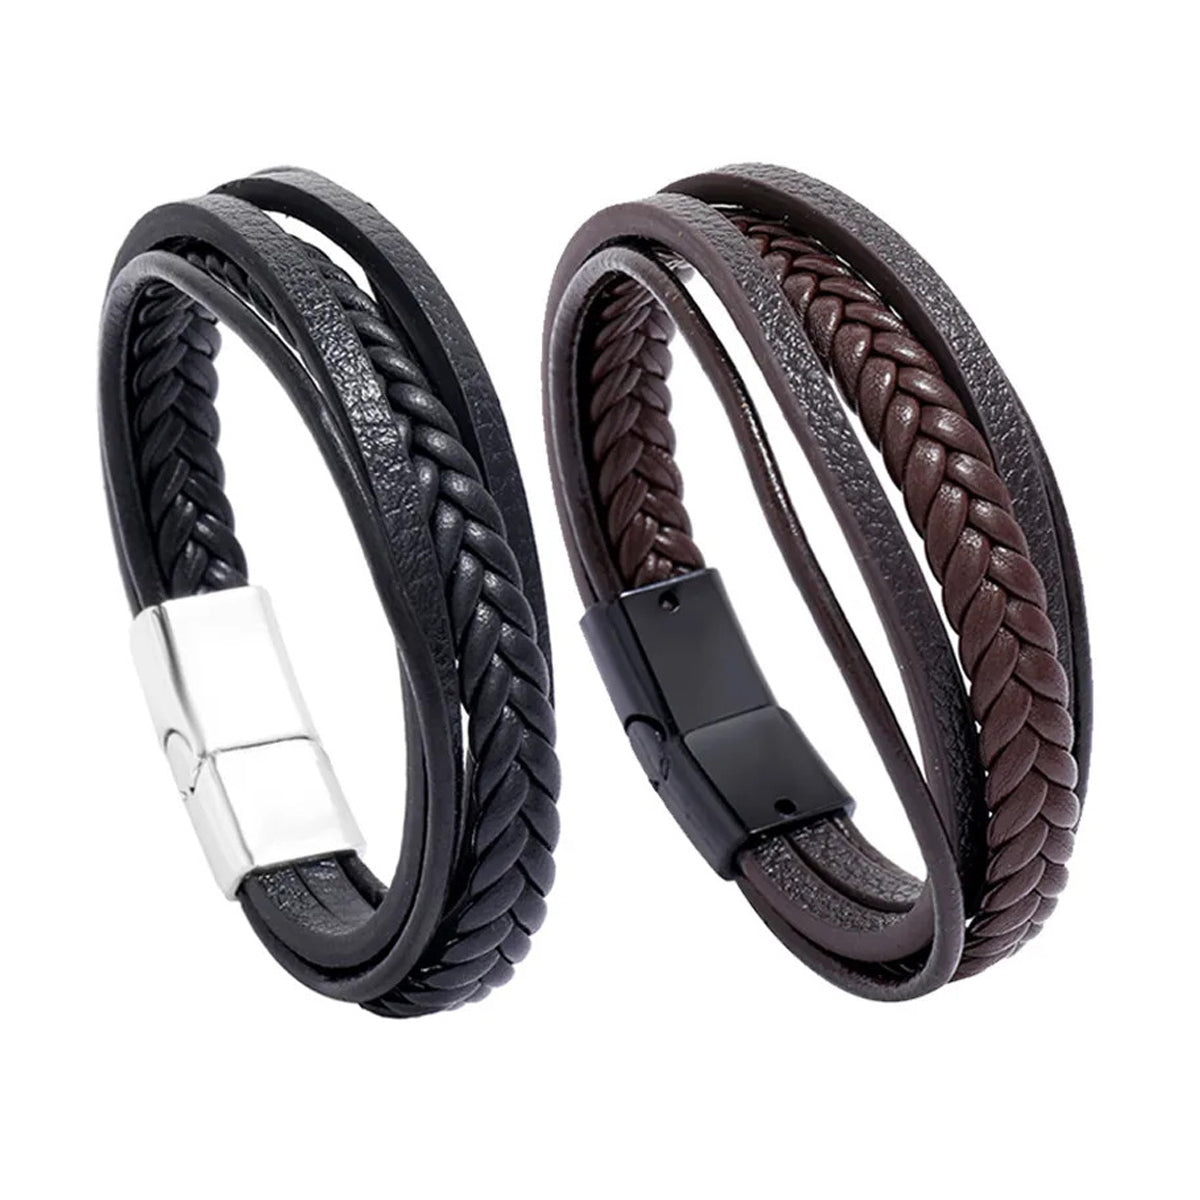 White double wrap split leather bracelet for a single charm